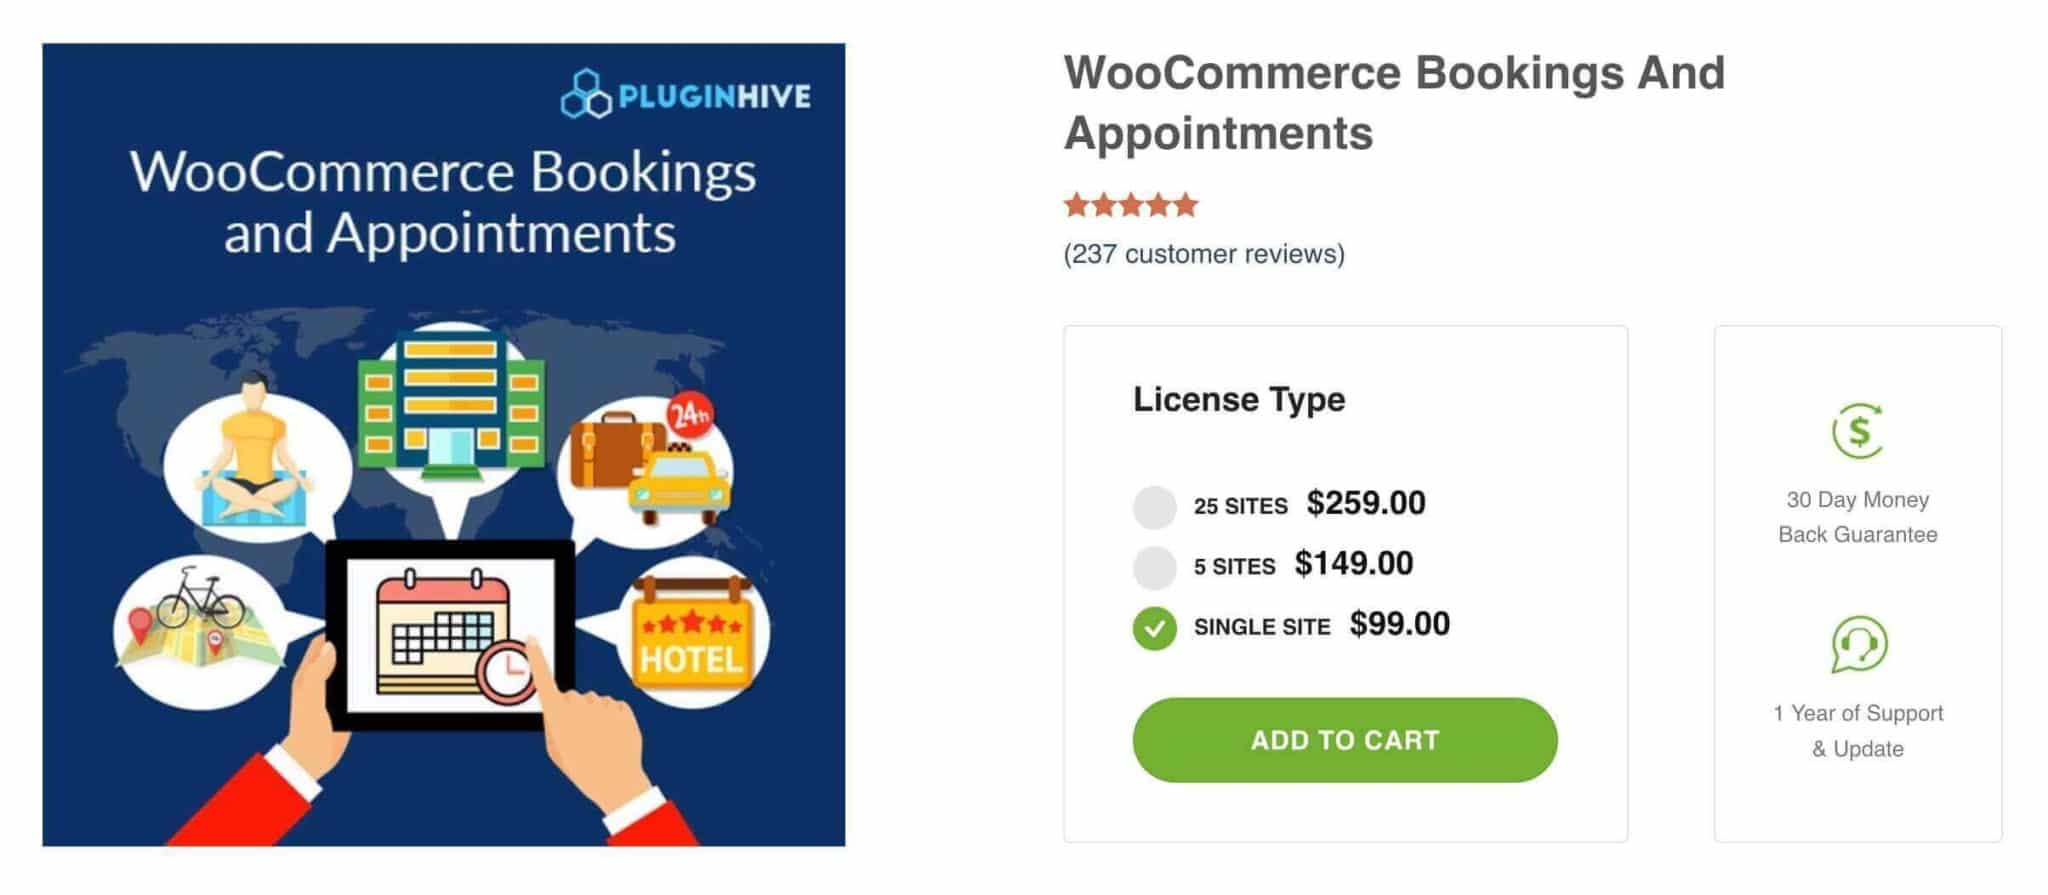 Best WordPress Booking Calendar Plugins for WooCommerce YayCommerce